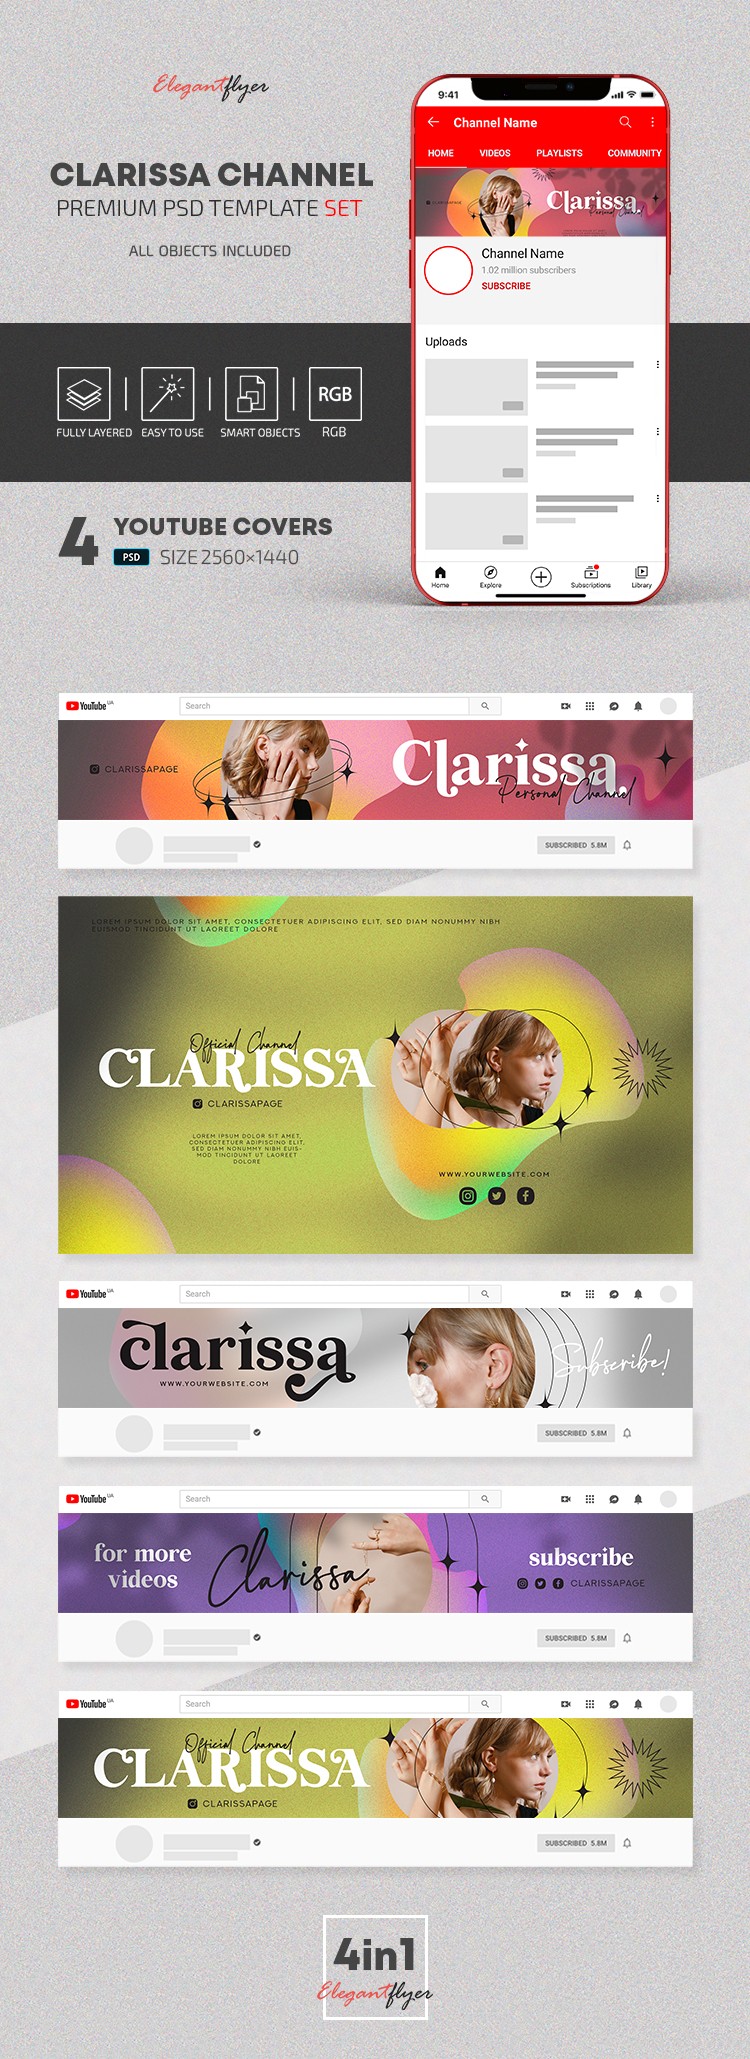 Canale Youtube Clarissa by ElegantFlyer